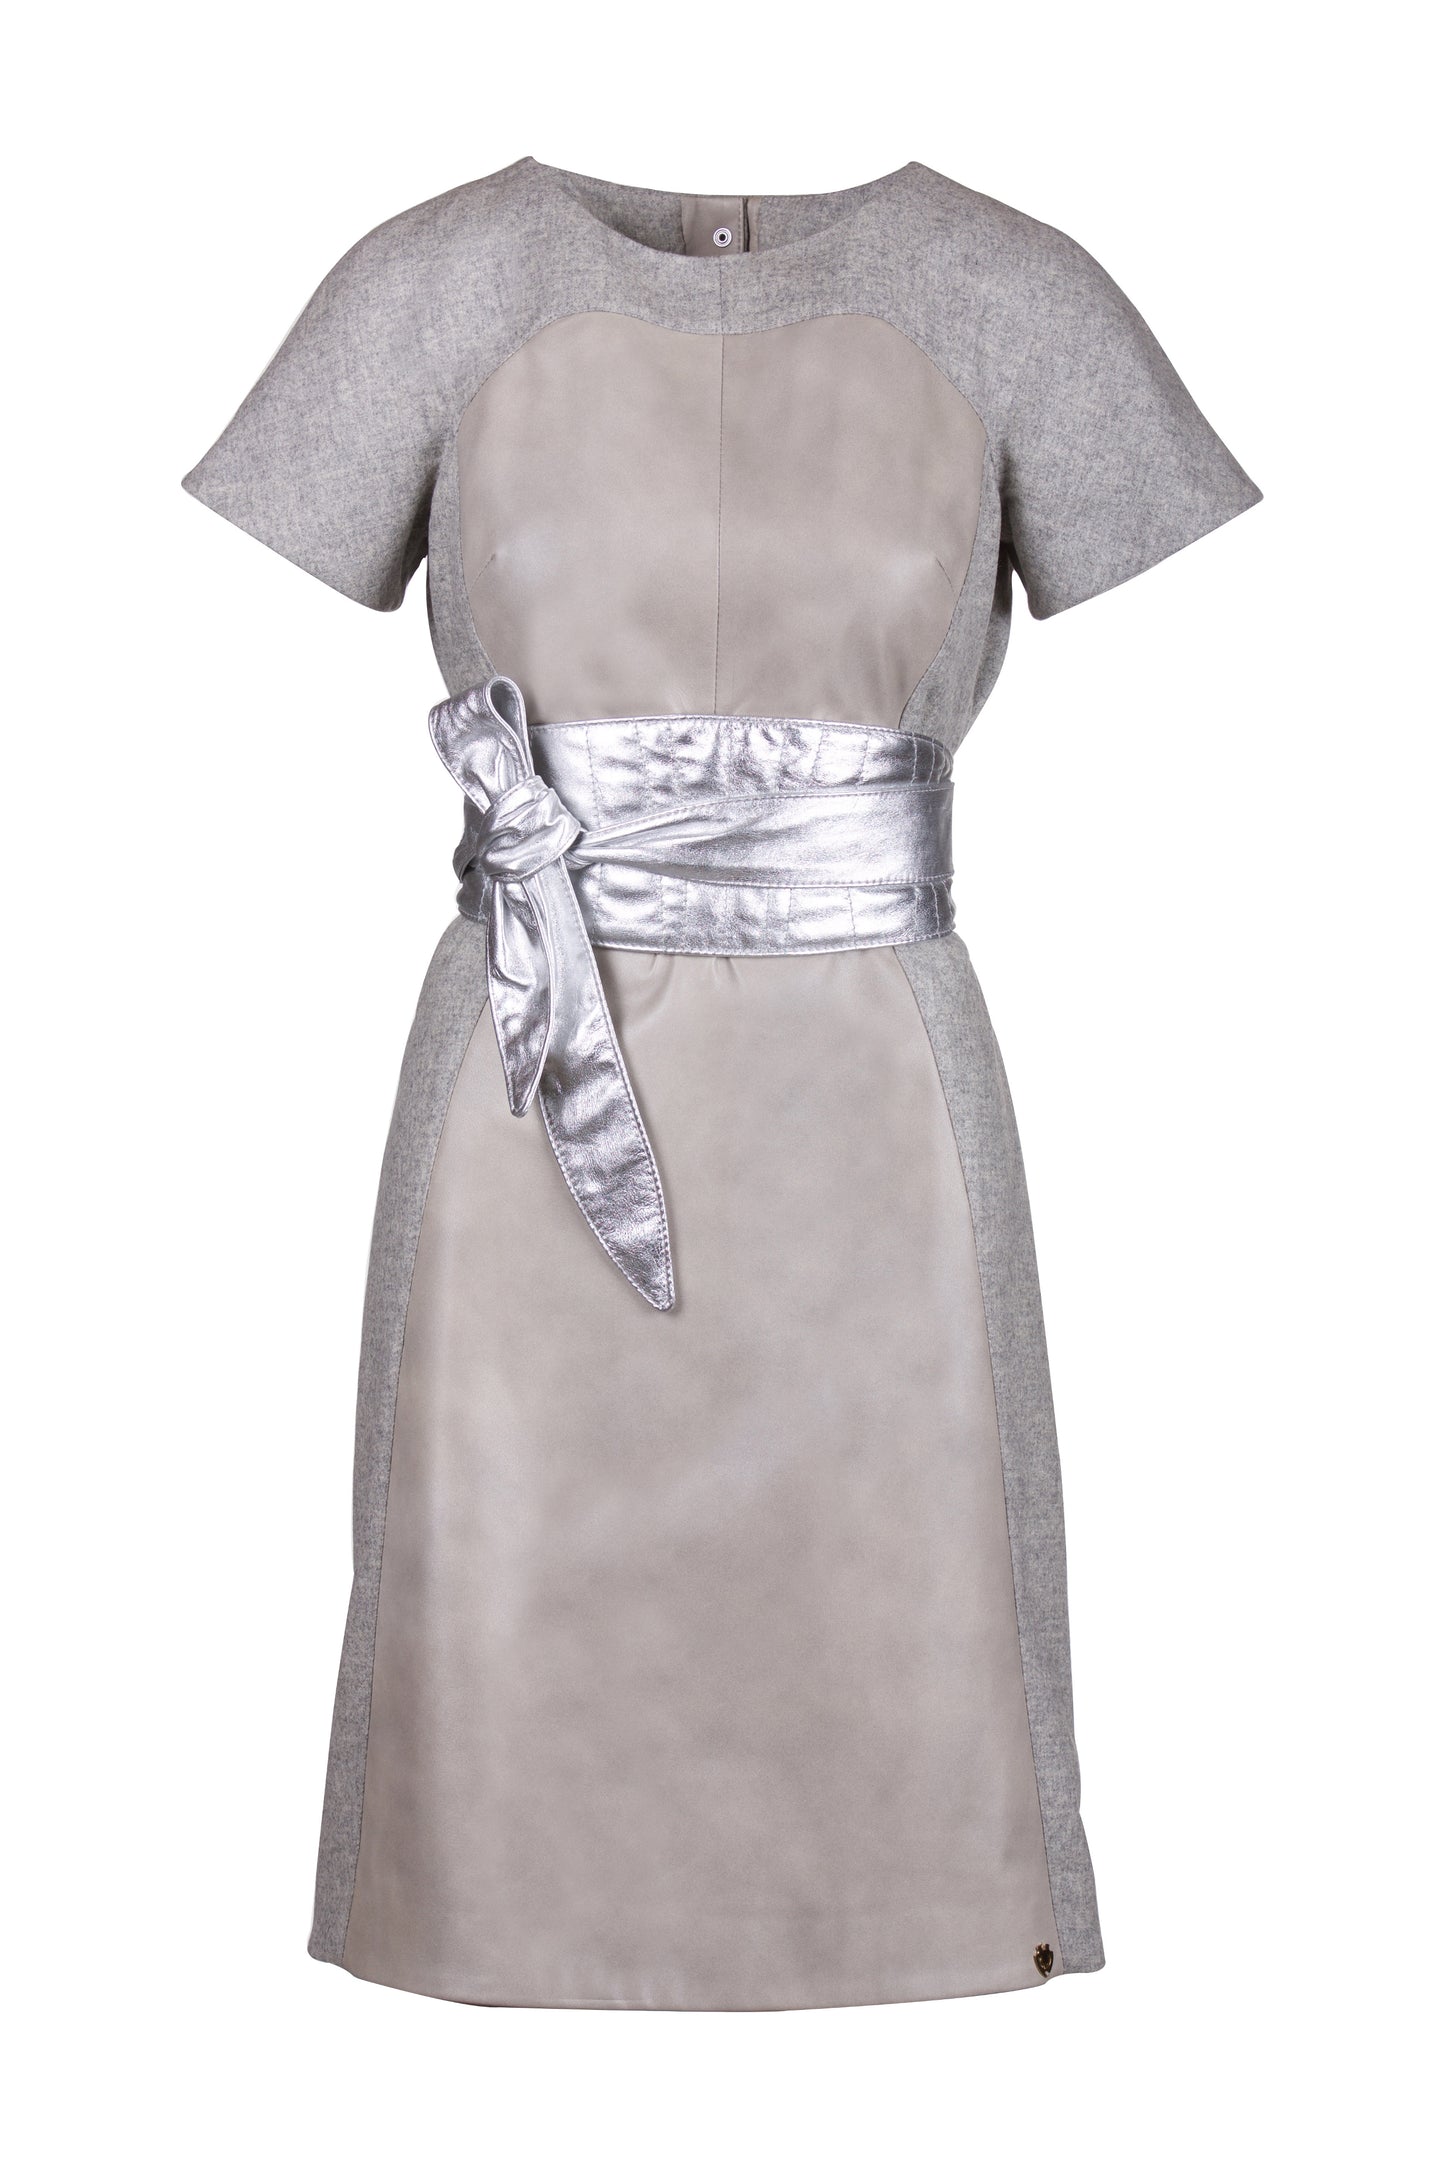 Merino Wool Reindeer Leather Dress- Limited Edition